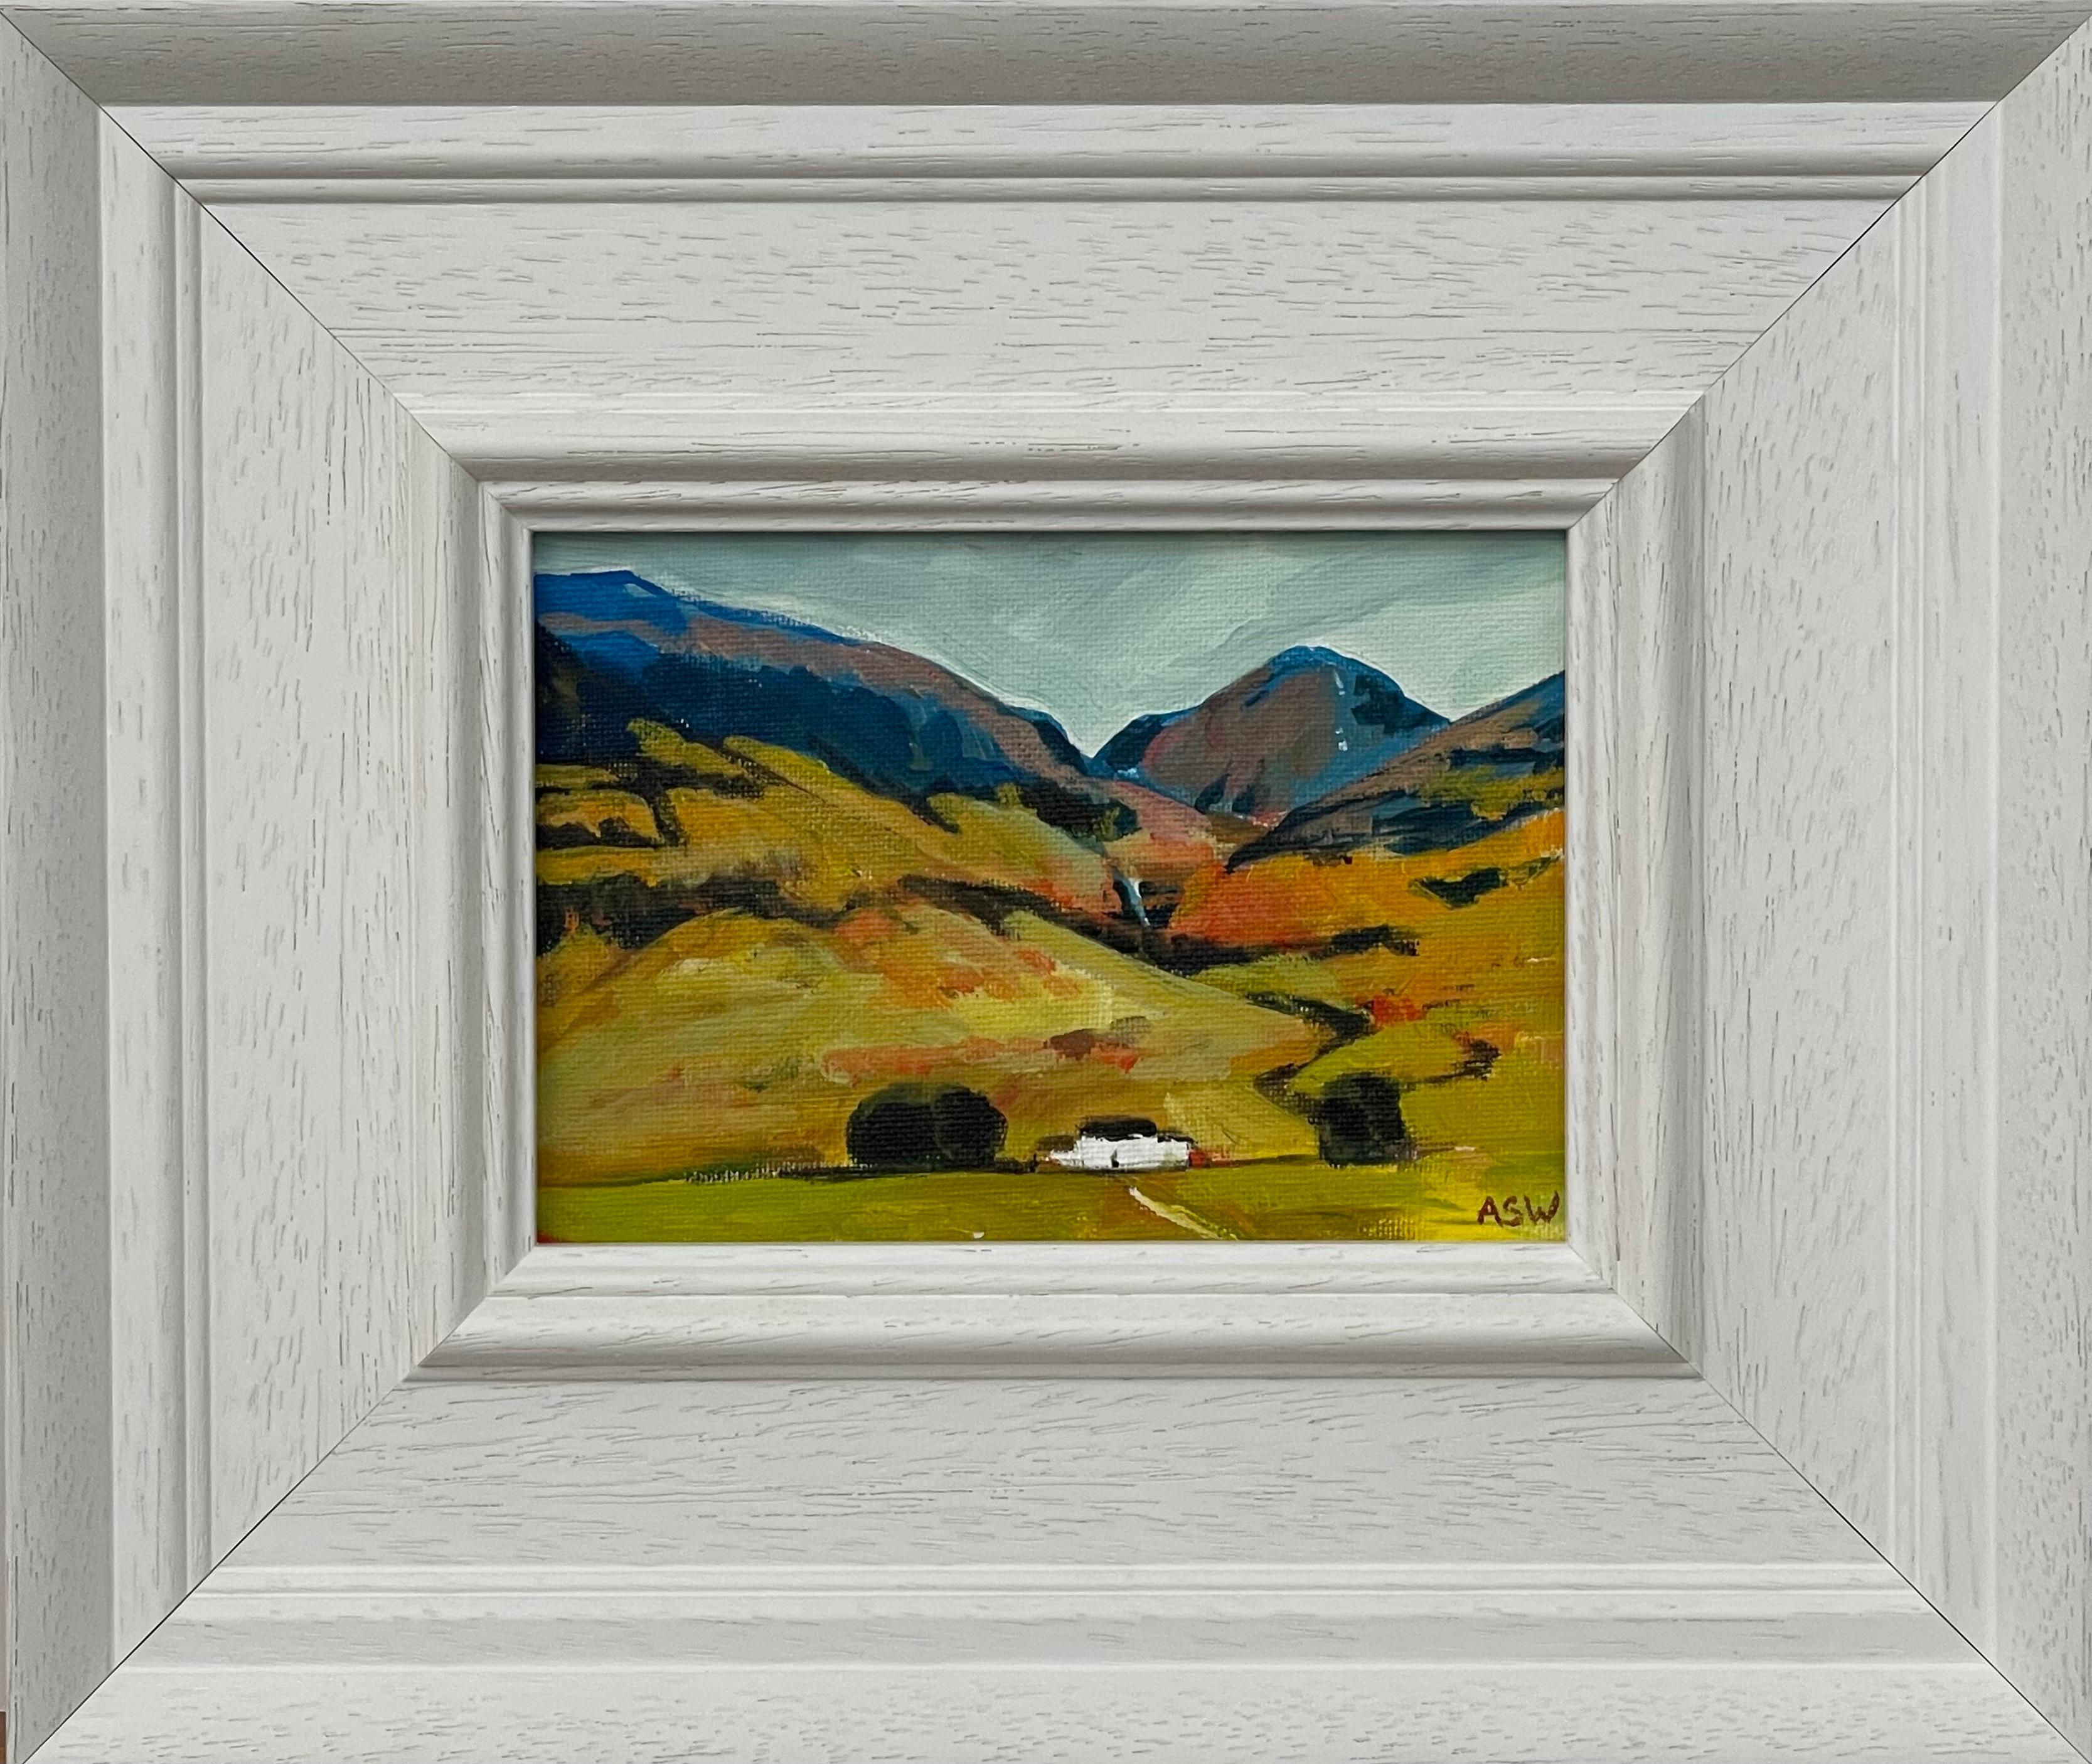 Angela Wakefield Landscape Painting - Miniature Landscape Study of Scottish Highlands by Contemporary British Artist